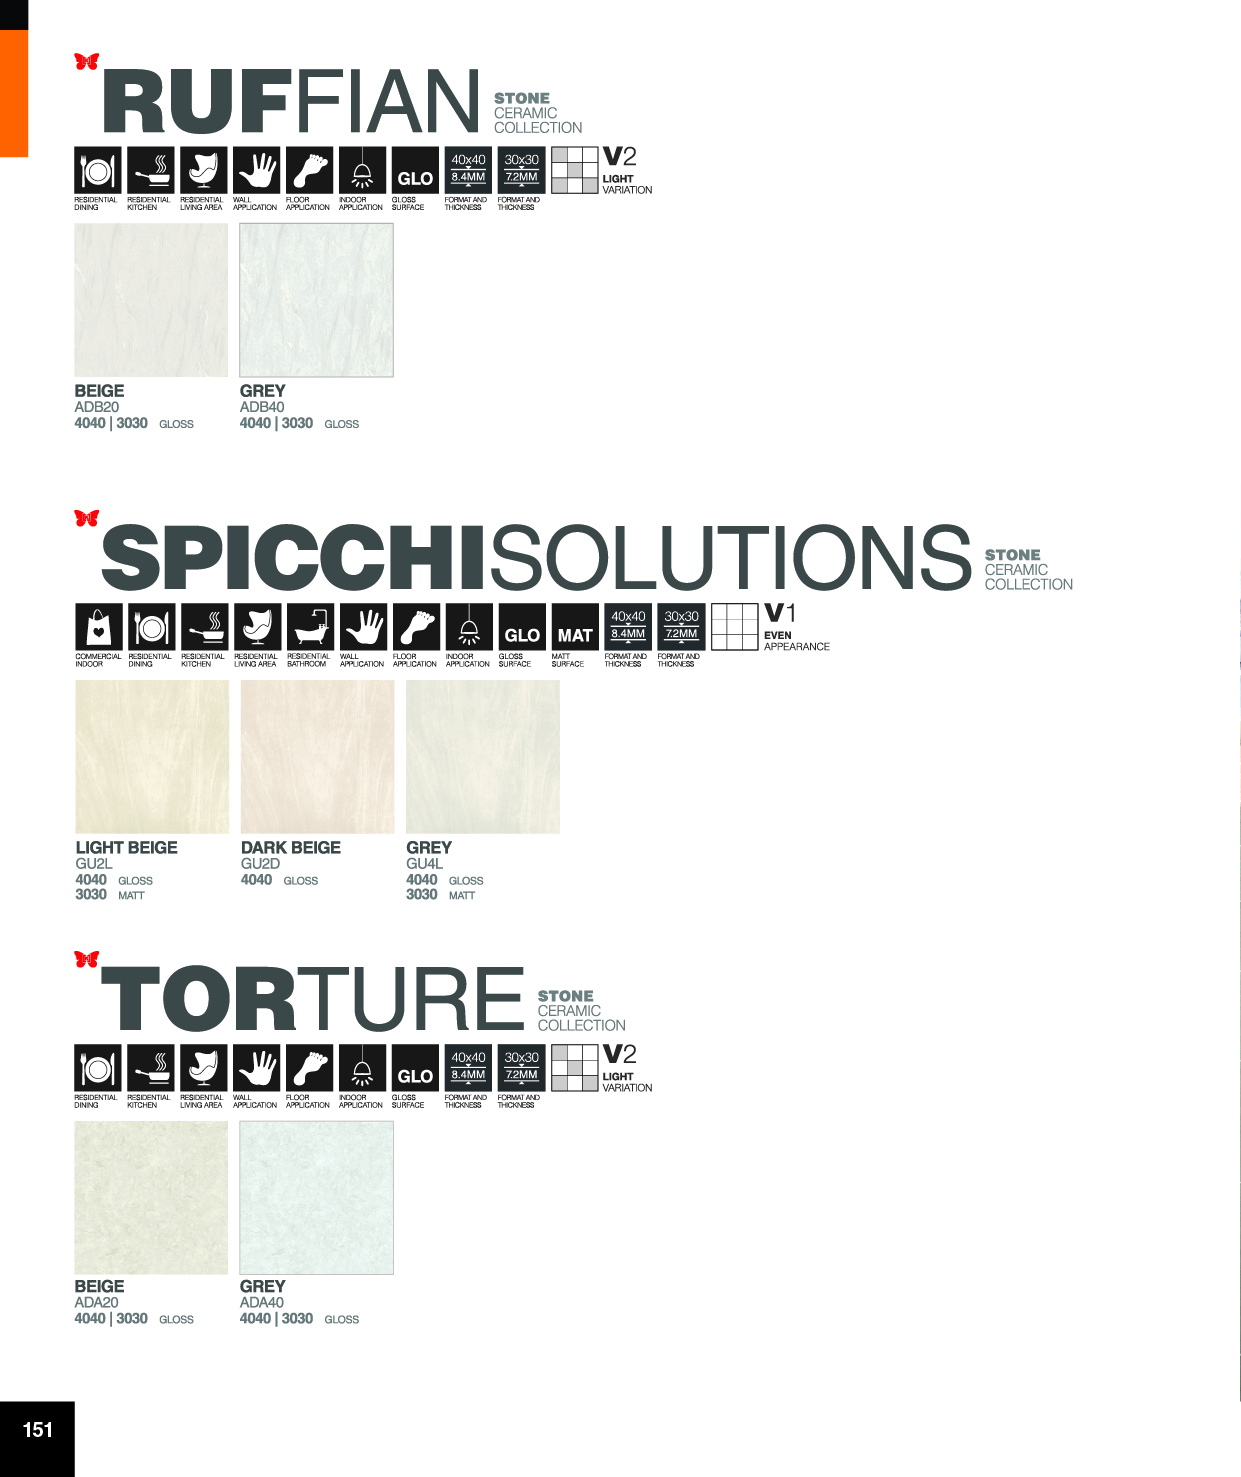 Ruffian-Spicchi-SolutionsTorture